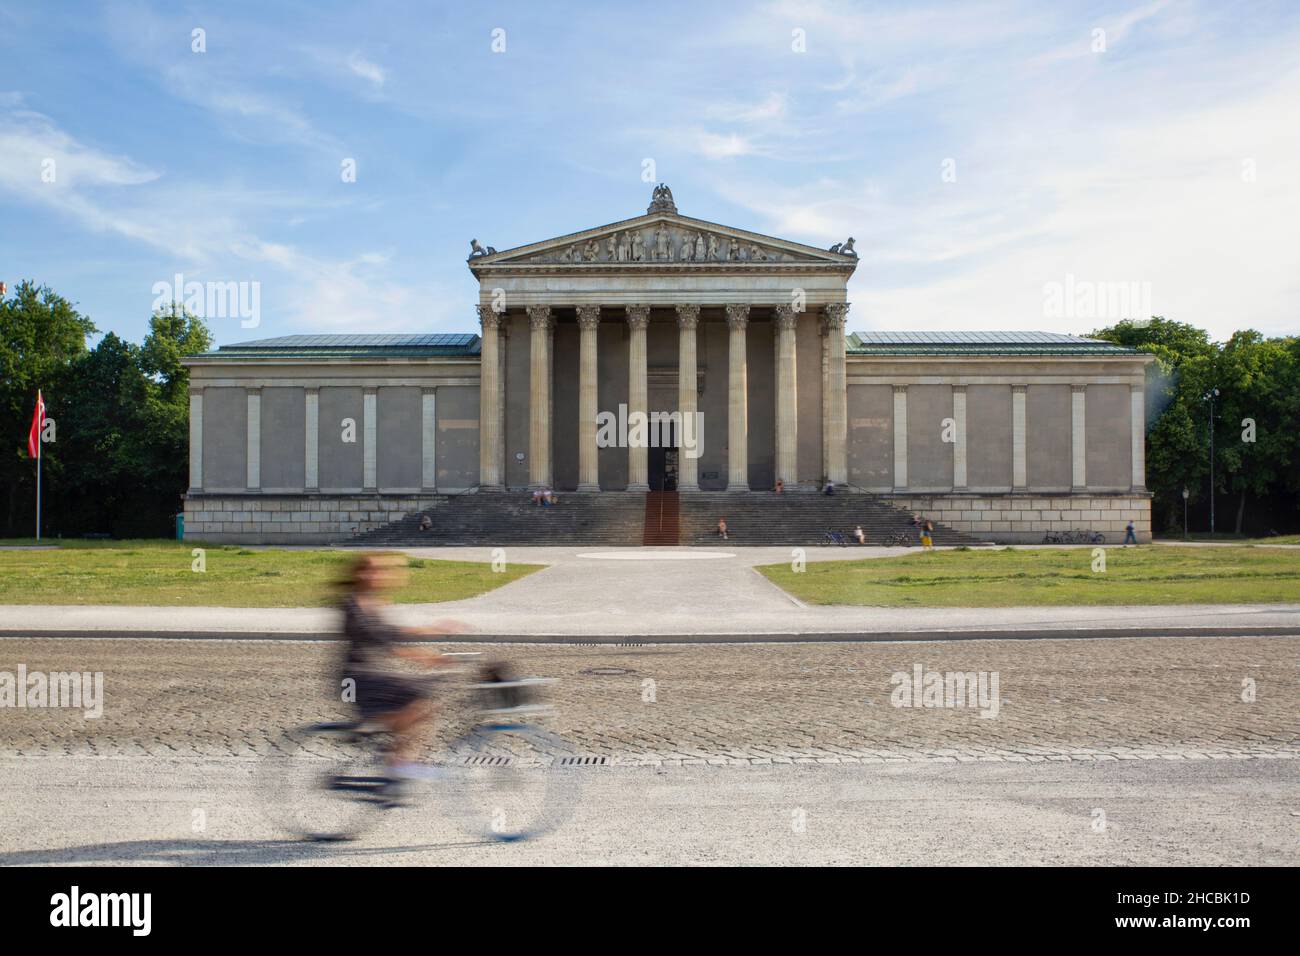 Germany, Bavaria, Munich, Woman riding bicycle past Staatliche Antikensammlung museum Stock Photo